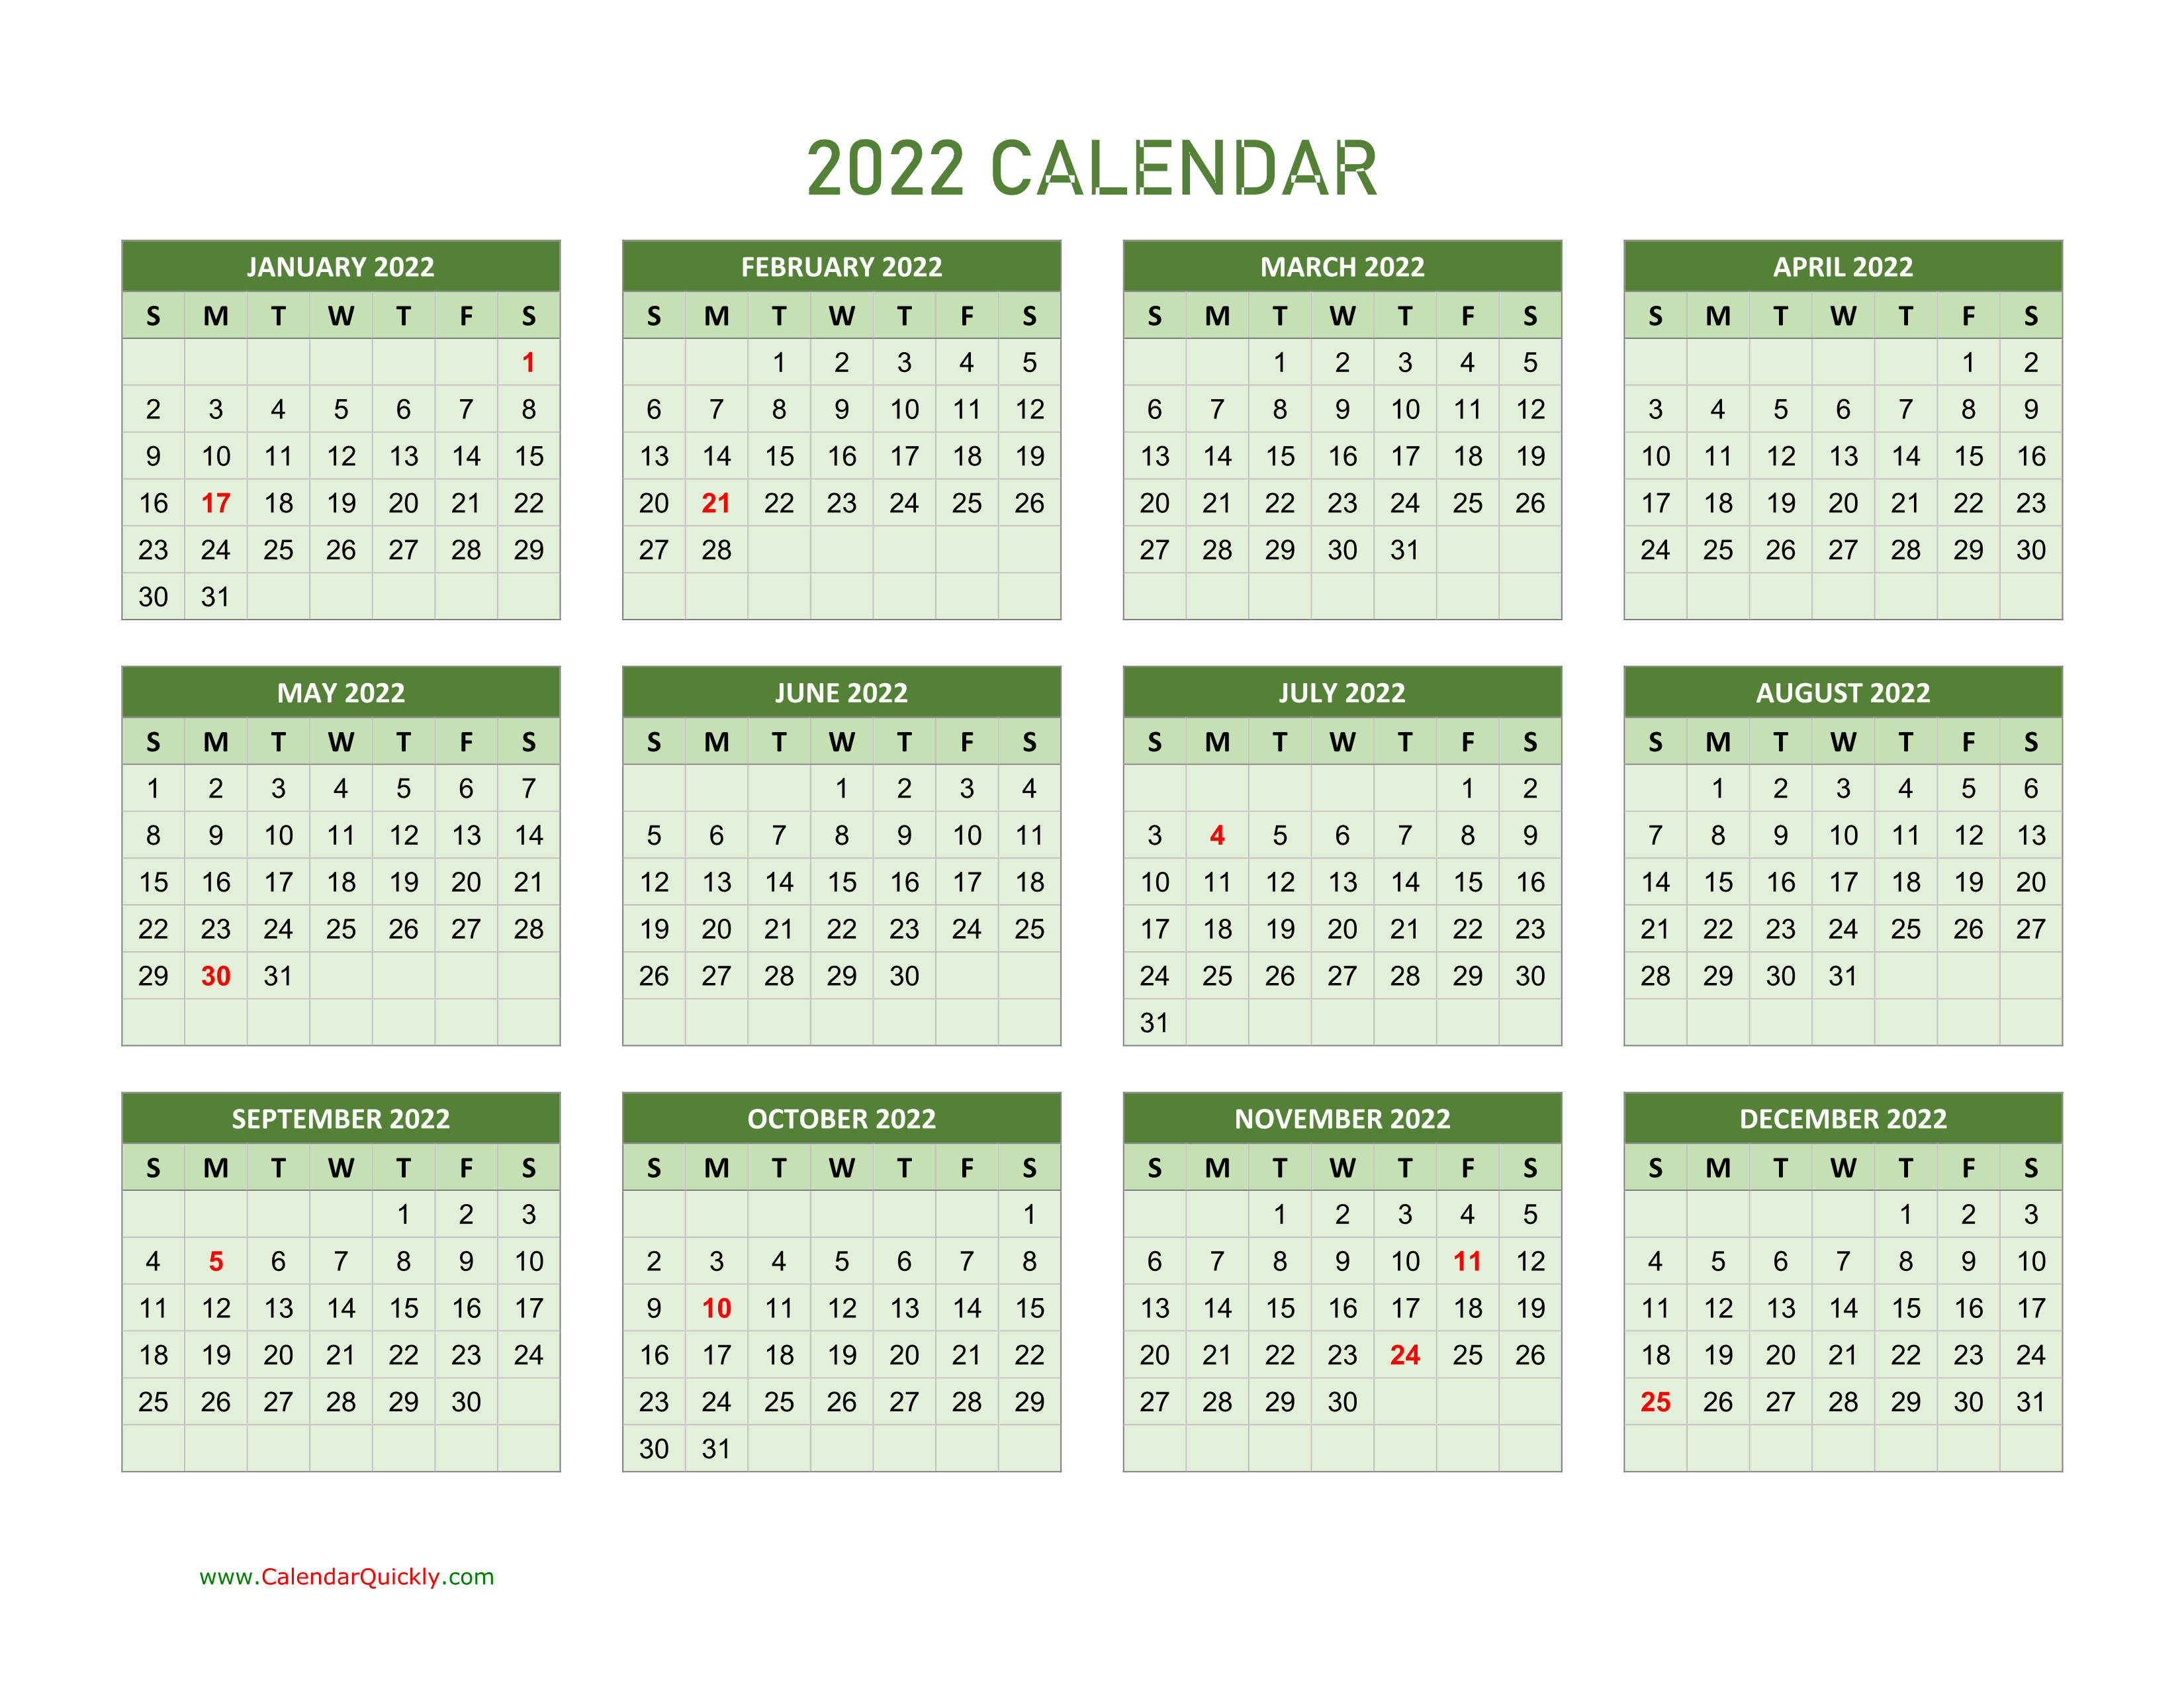 yearly calendar 2022 calendar quickly